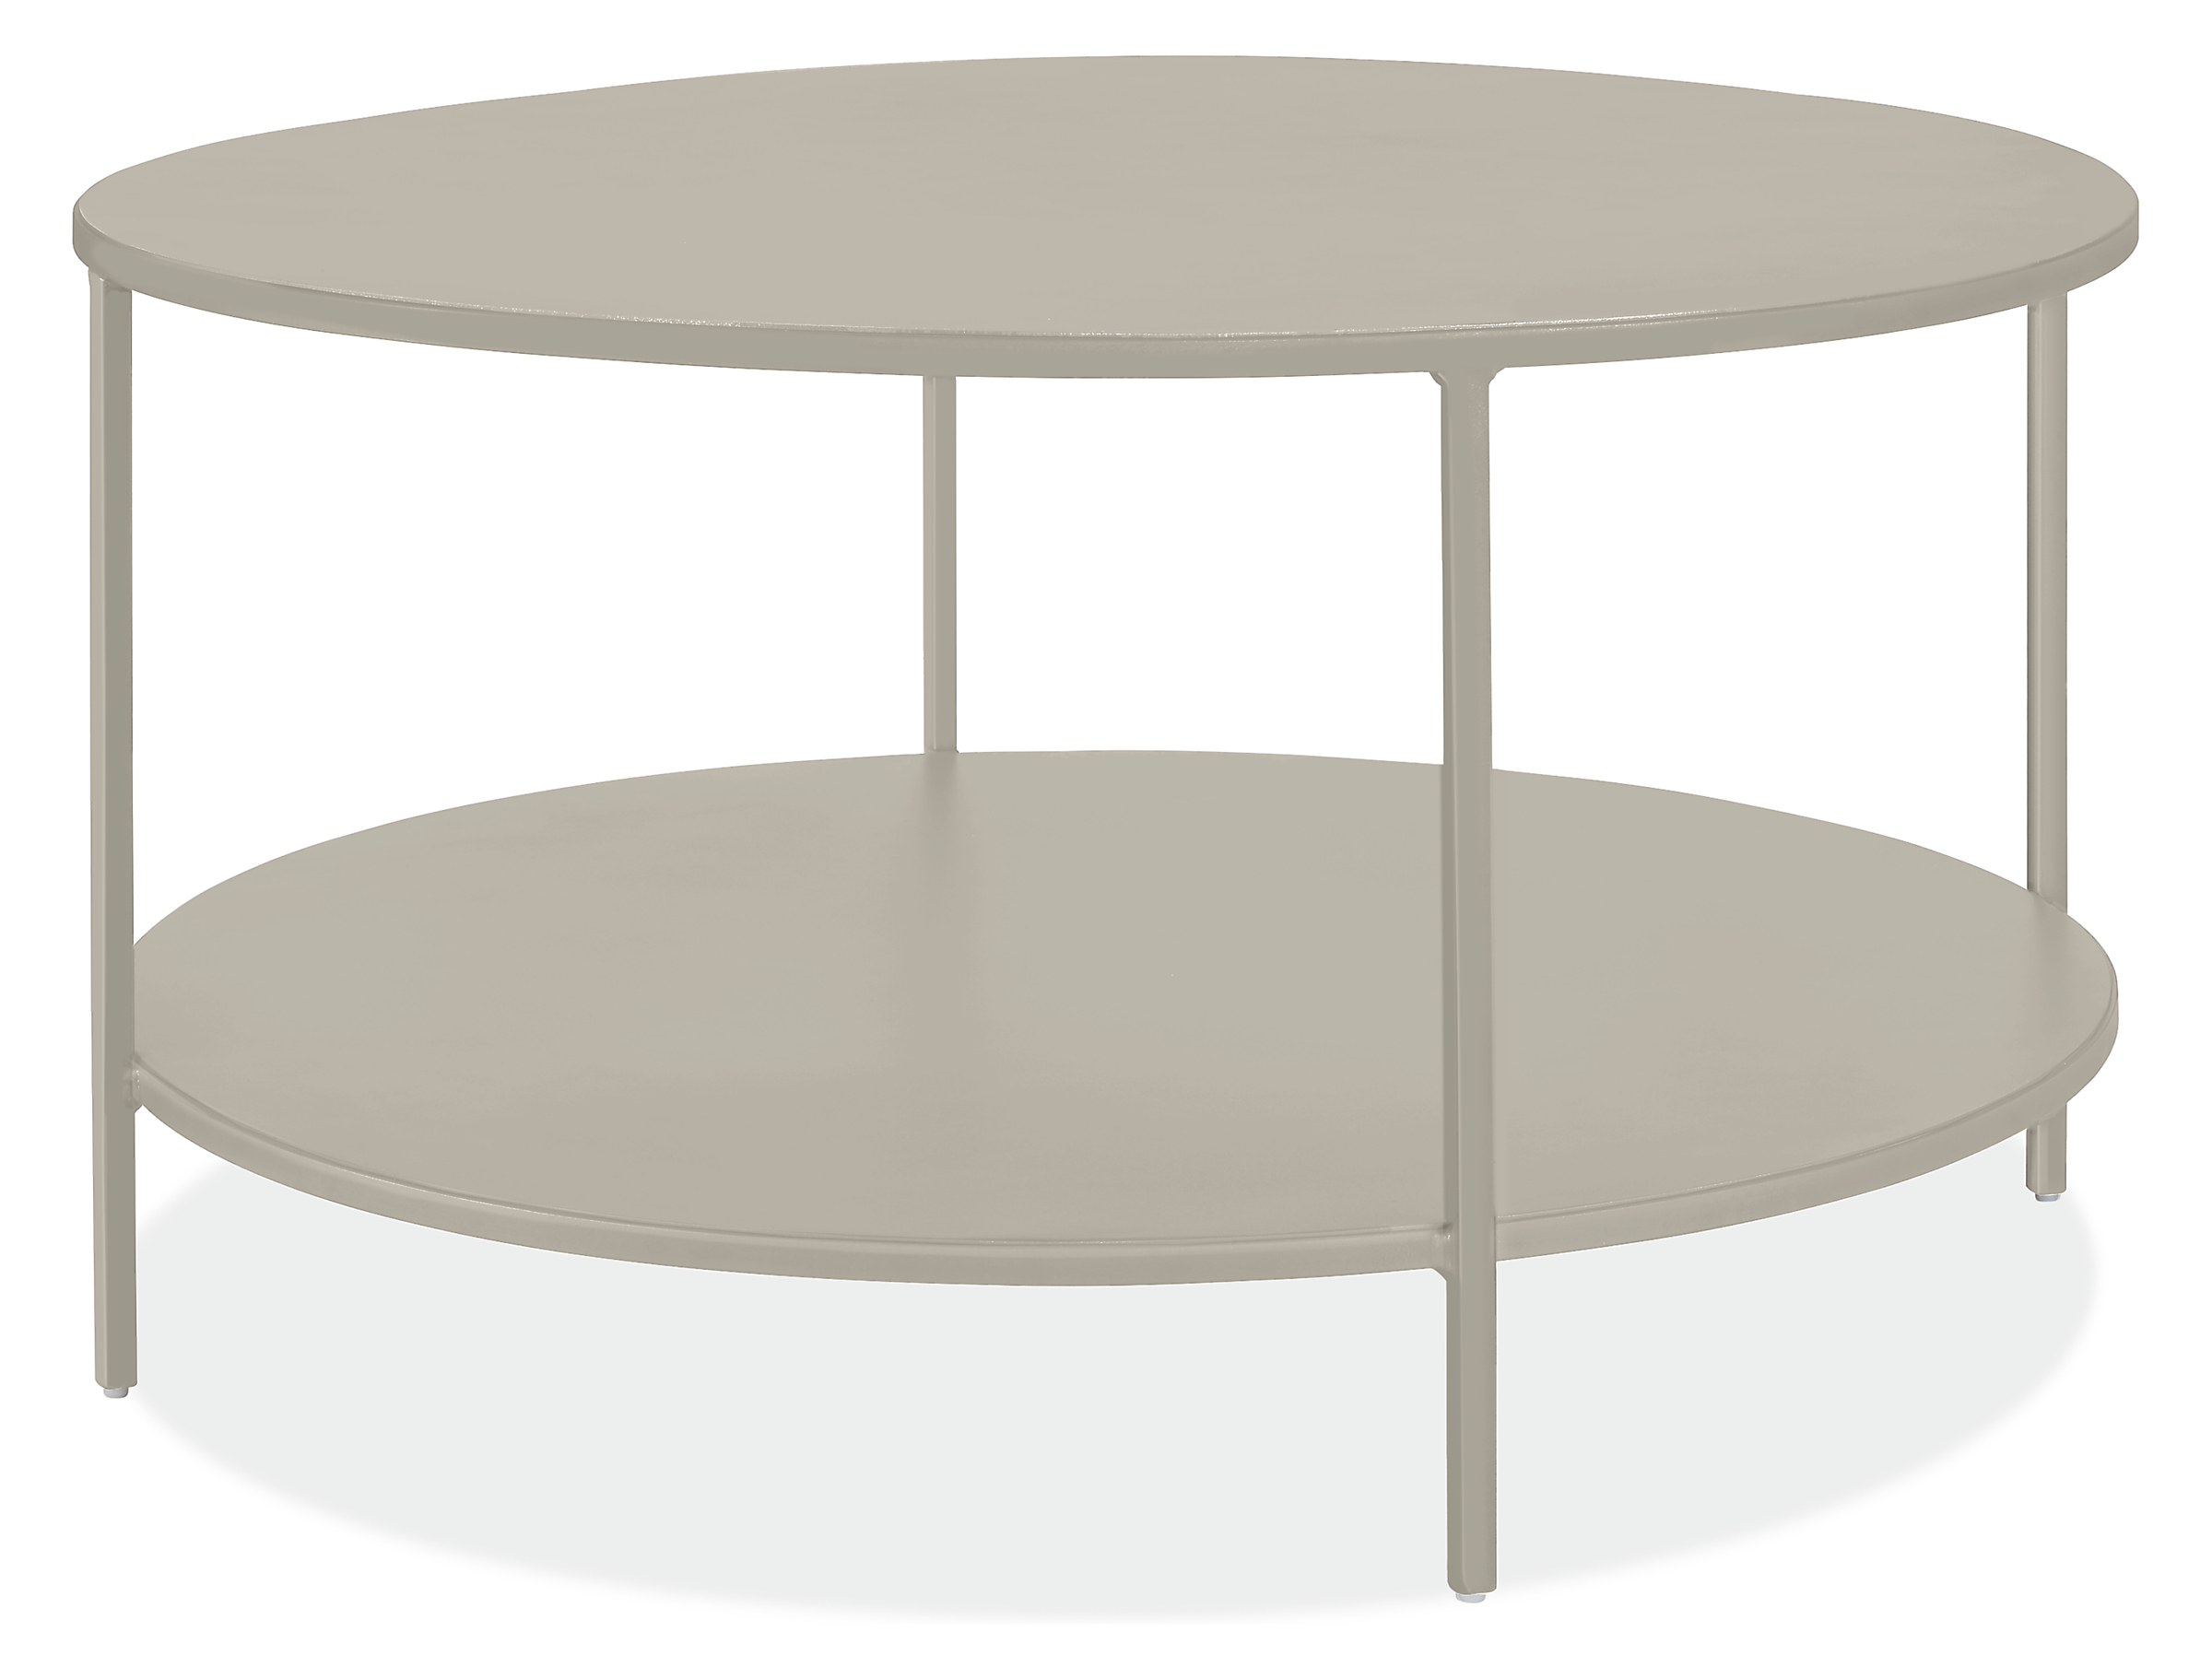 Slim 30 diam 16h Round Coffee Table with Shelf